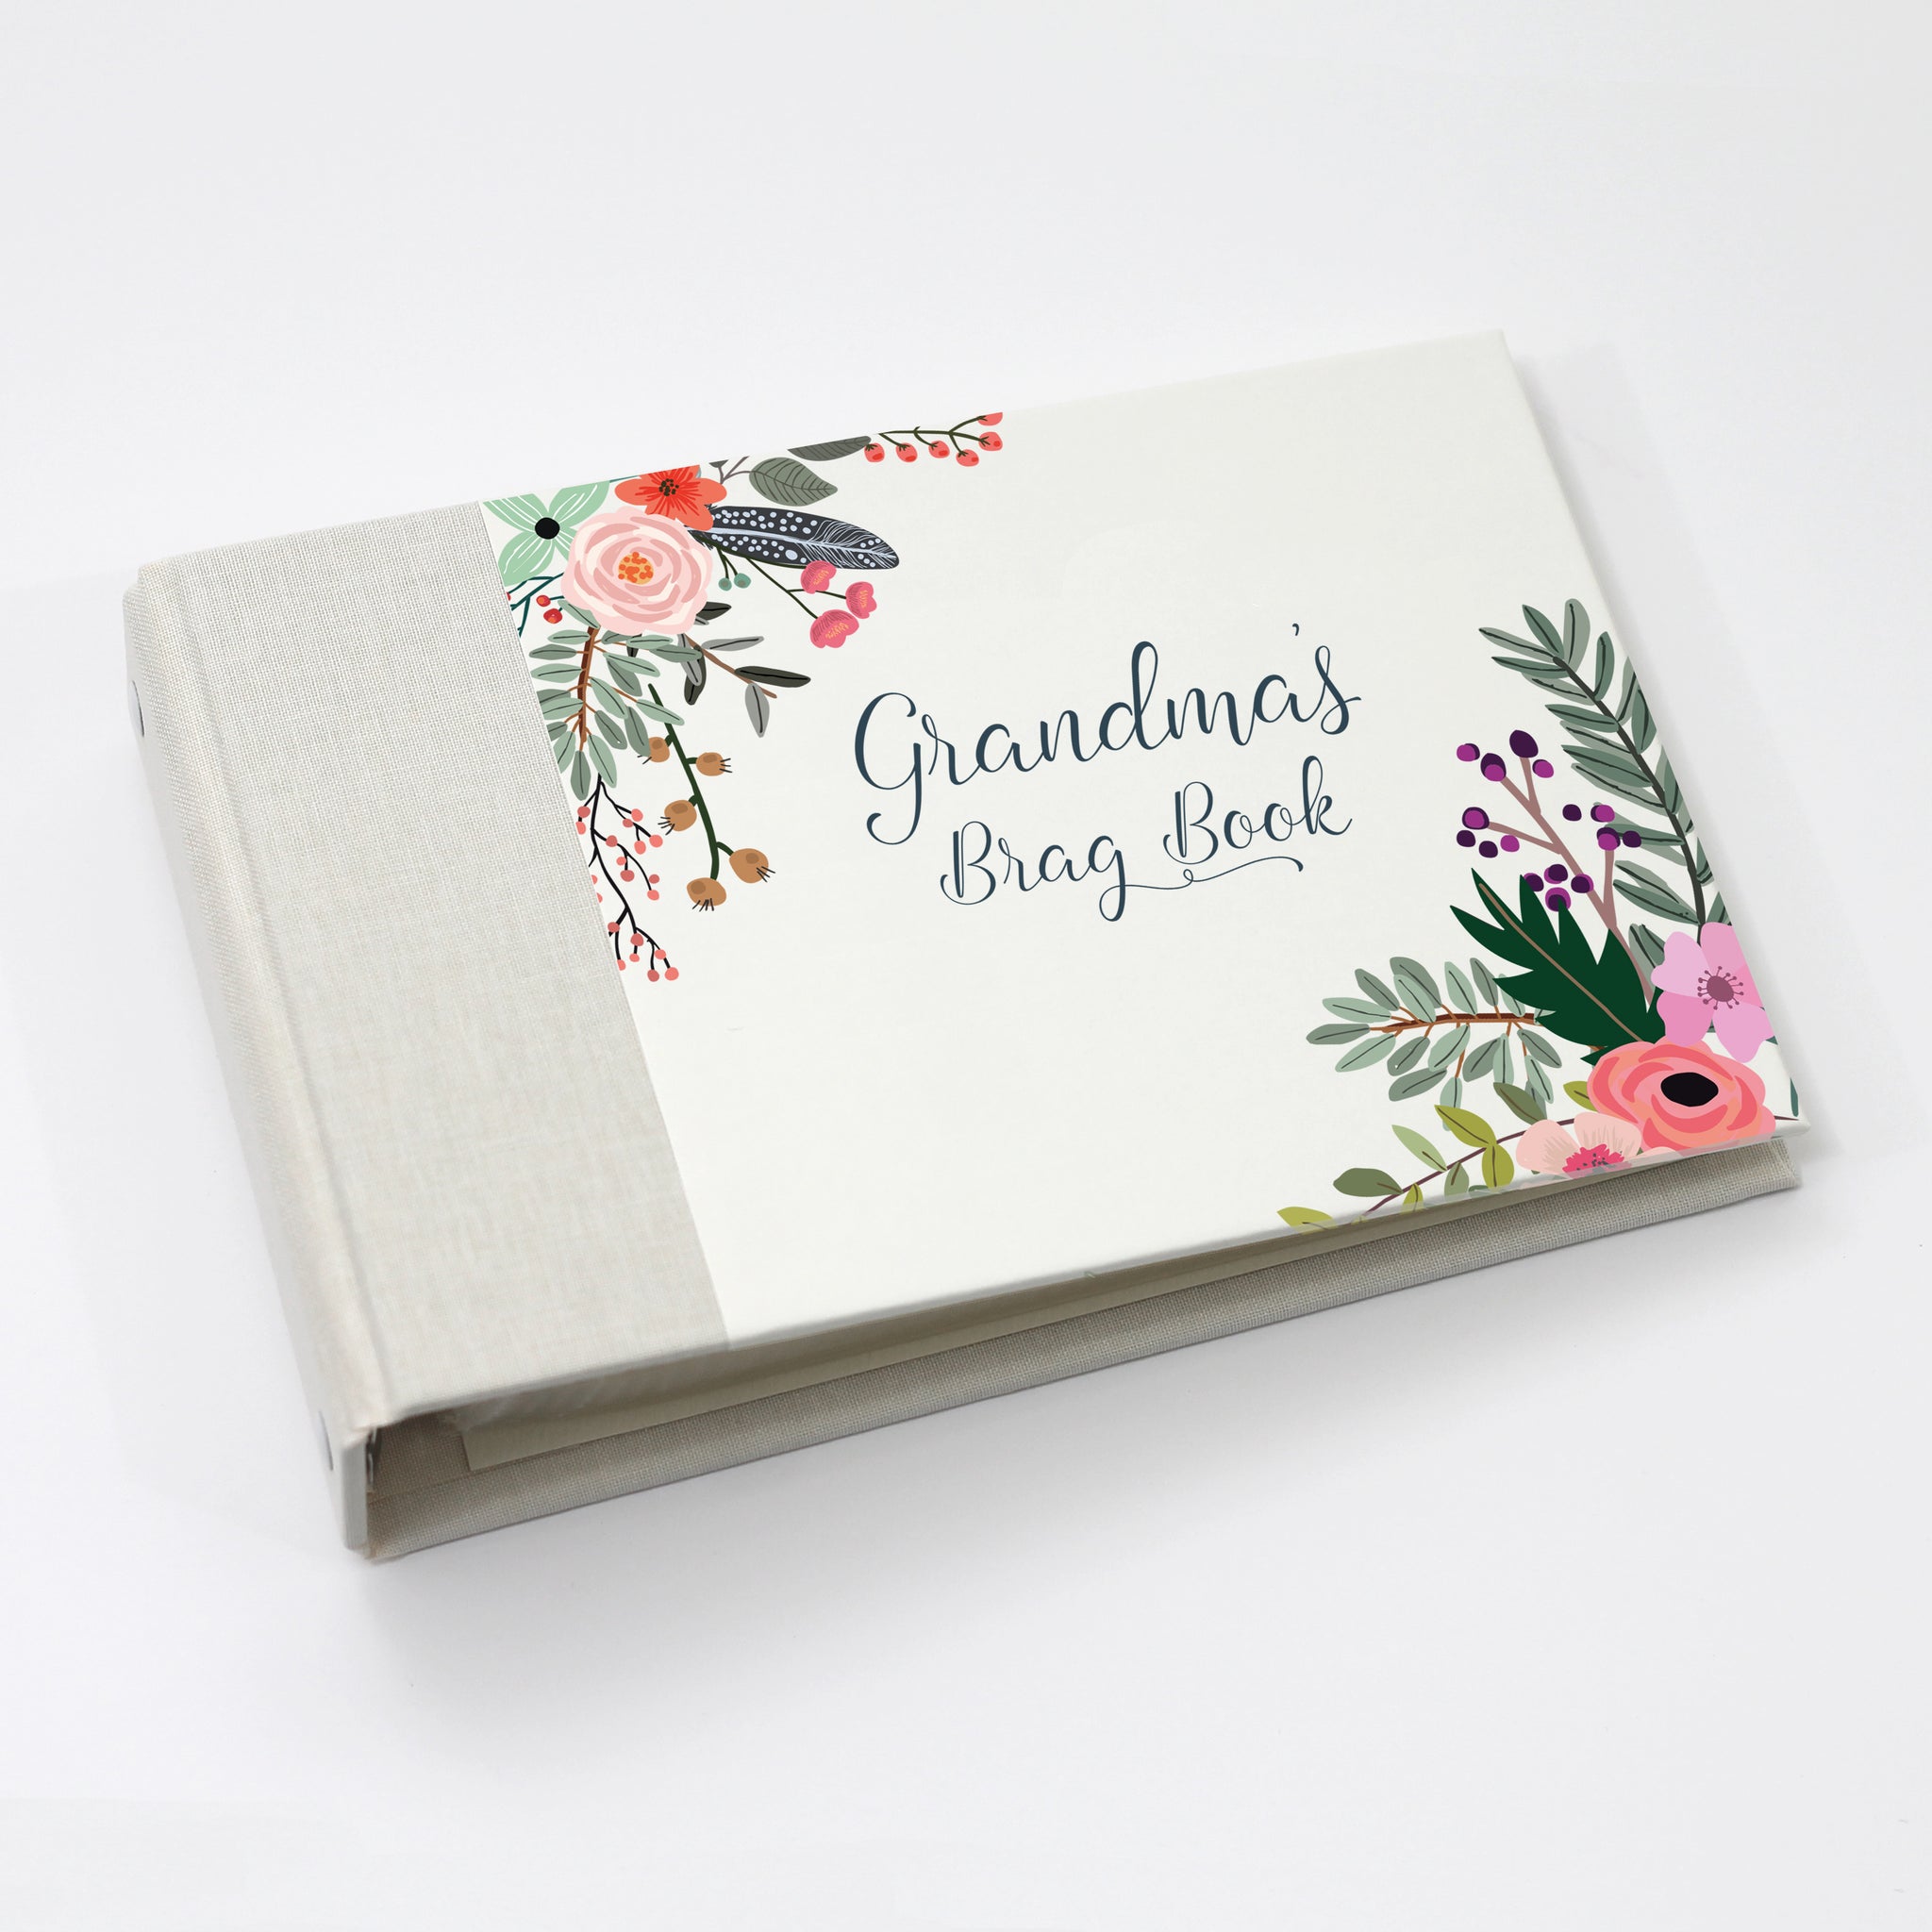 Great Grandma Photo Album Brag Book for Great Grandchildren's